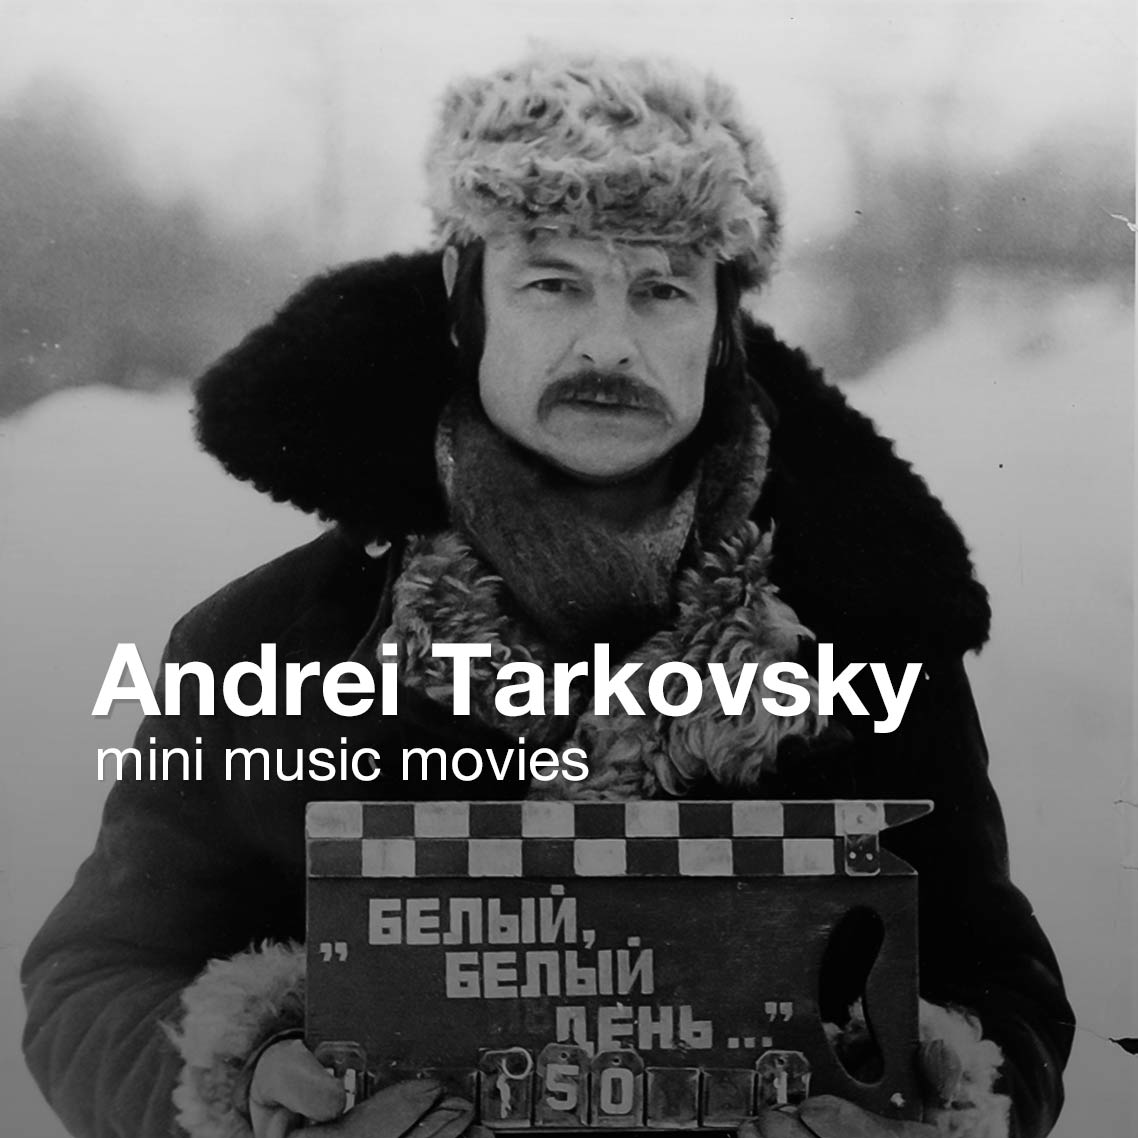 Andrei Tarkovsky mini music movies